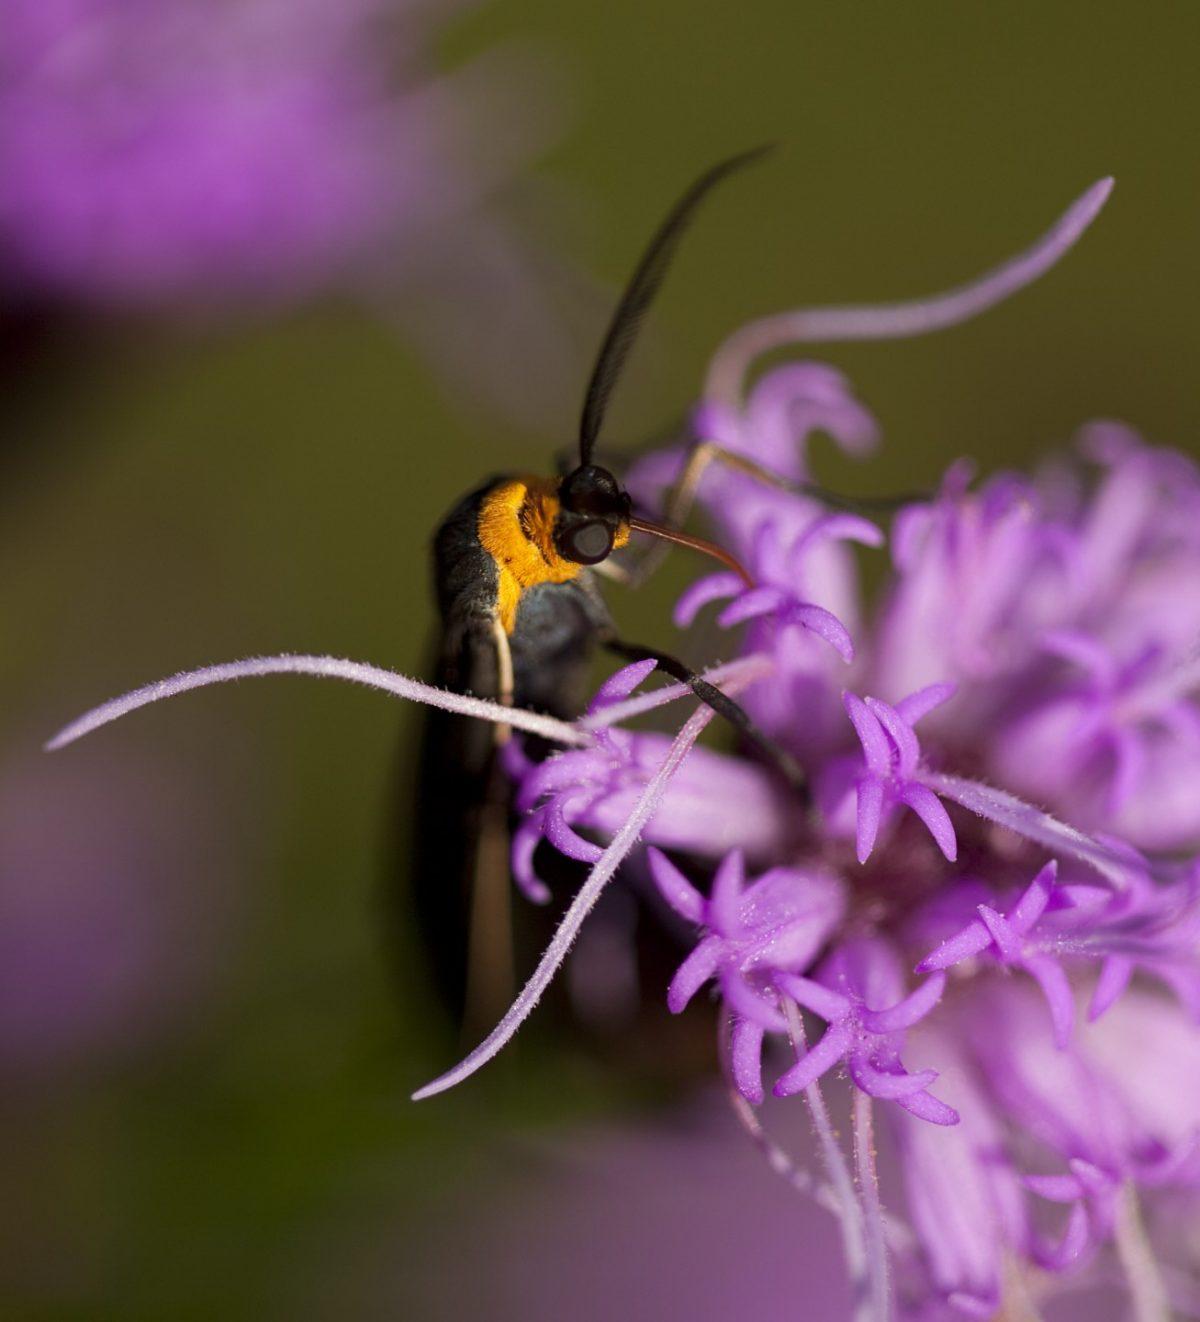 Yellow-collared Scape Moth, Cisseps fulvicollis. Photo: Linda Read